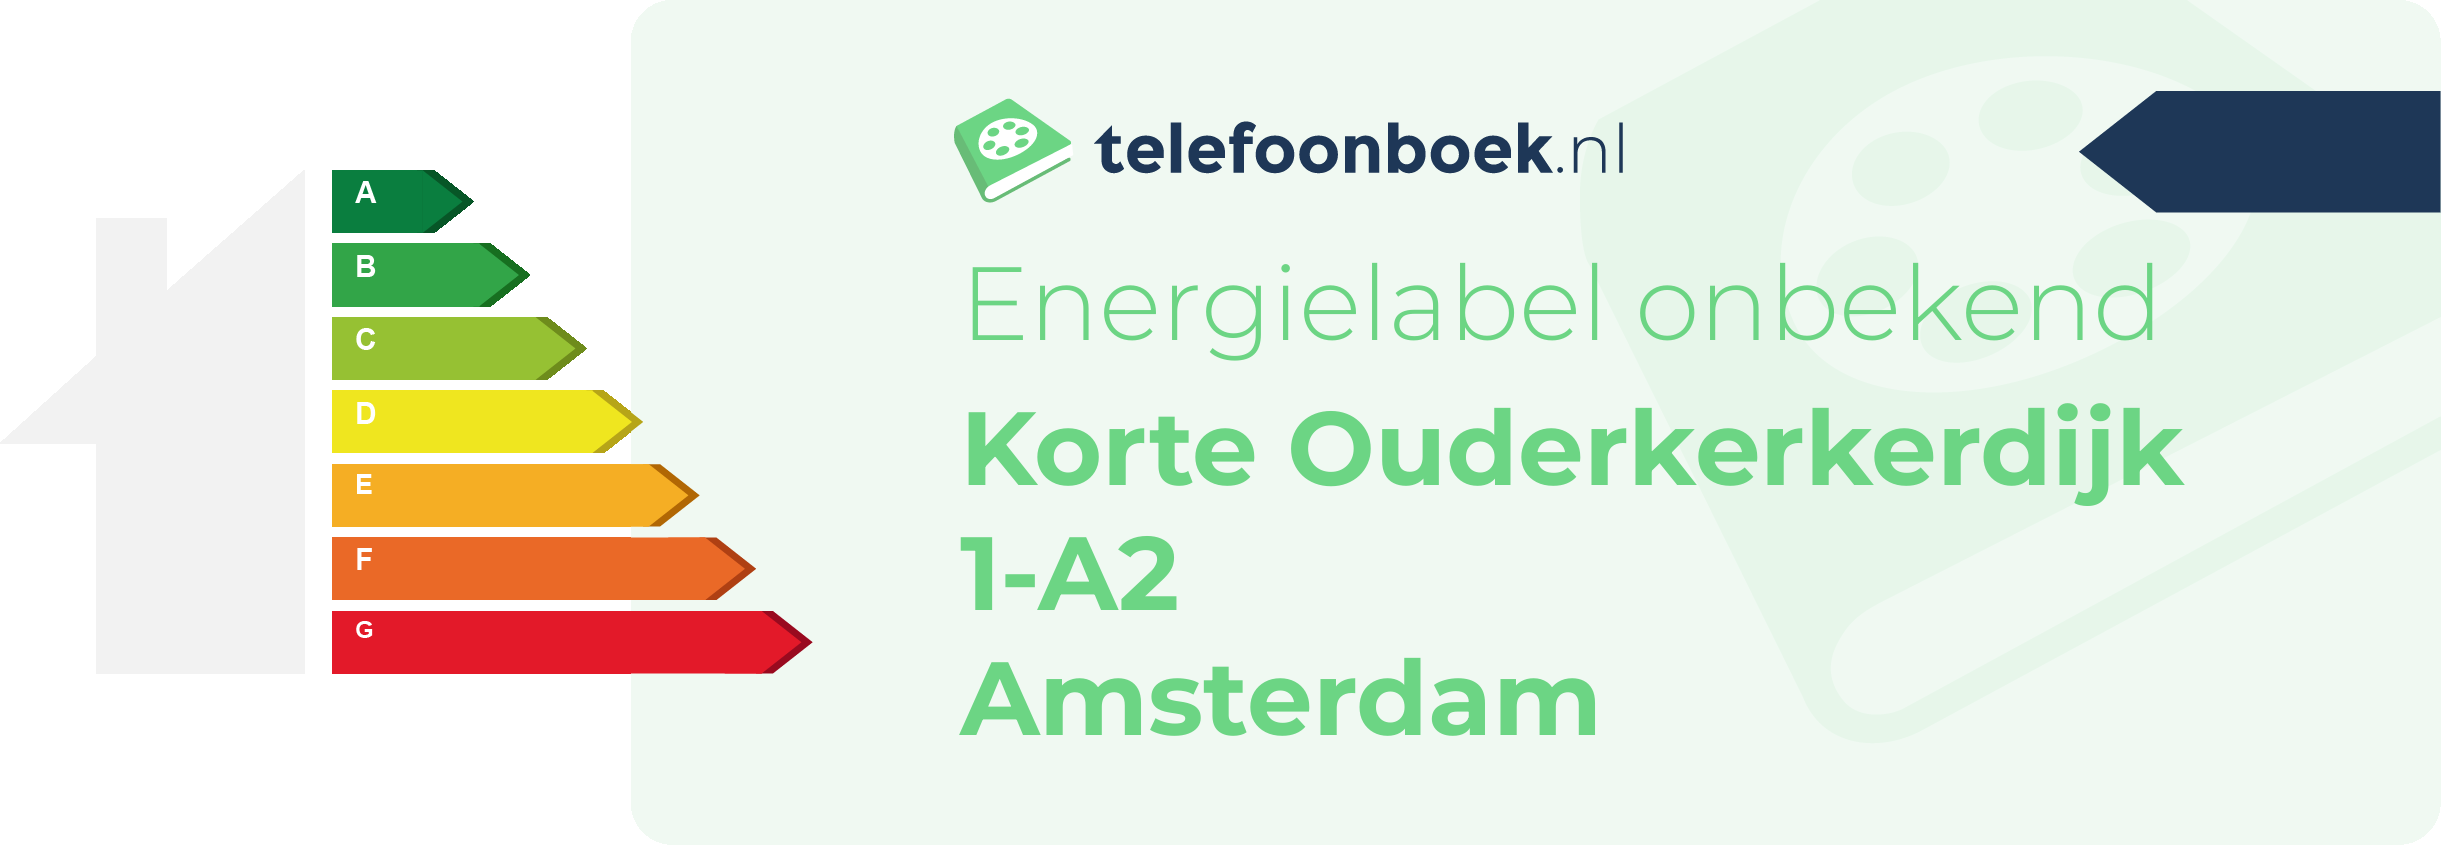 Energielabel Korte Ouderkerkerdijk 1-A2 Amsterdam